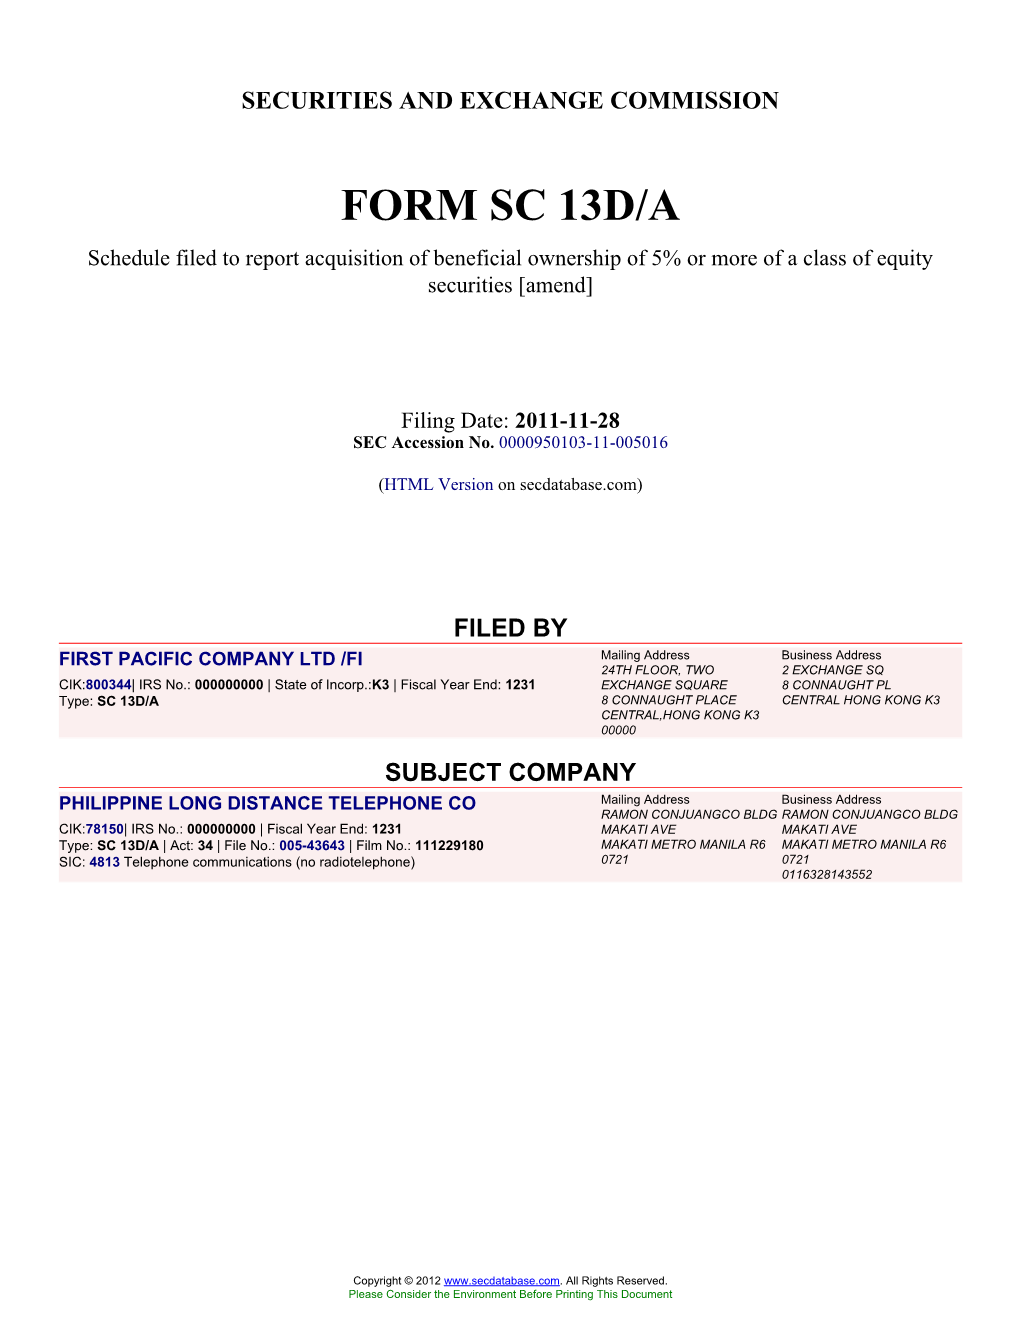 FIRST PACIFIC COMPANY LTD /FI (Form: SC 13D/A, Filing Date: 11/28/2011)